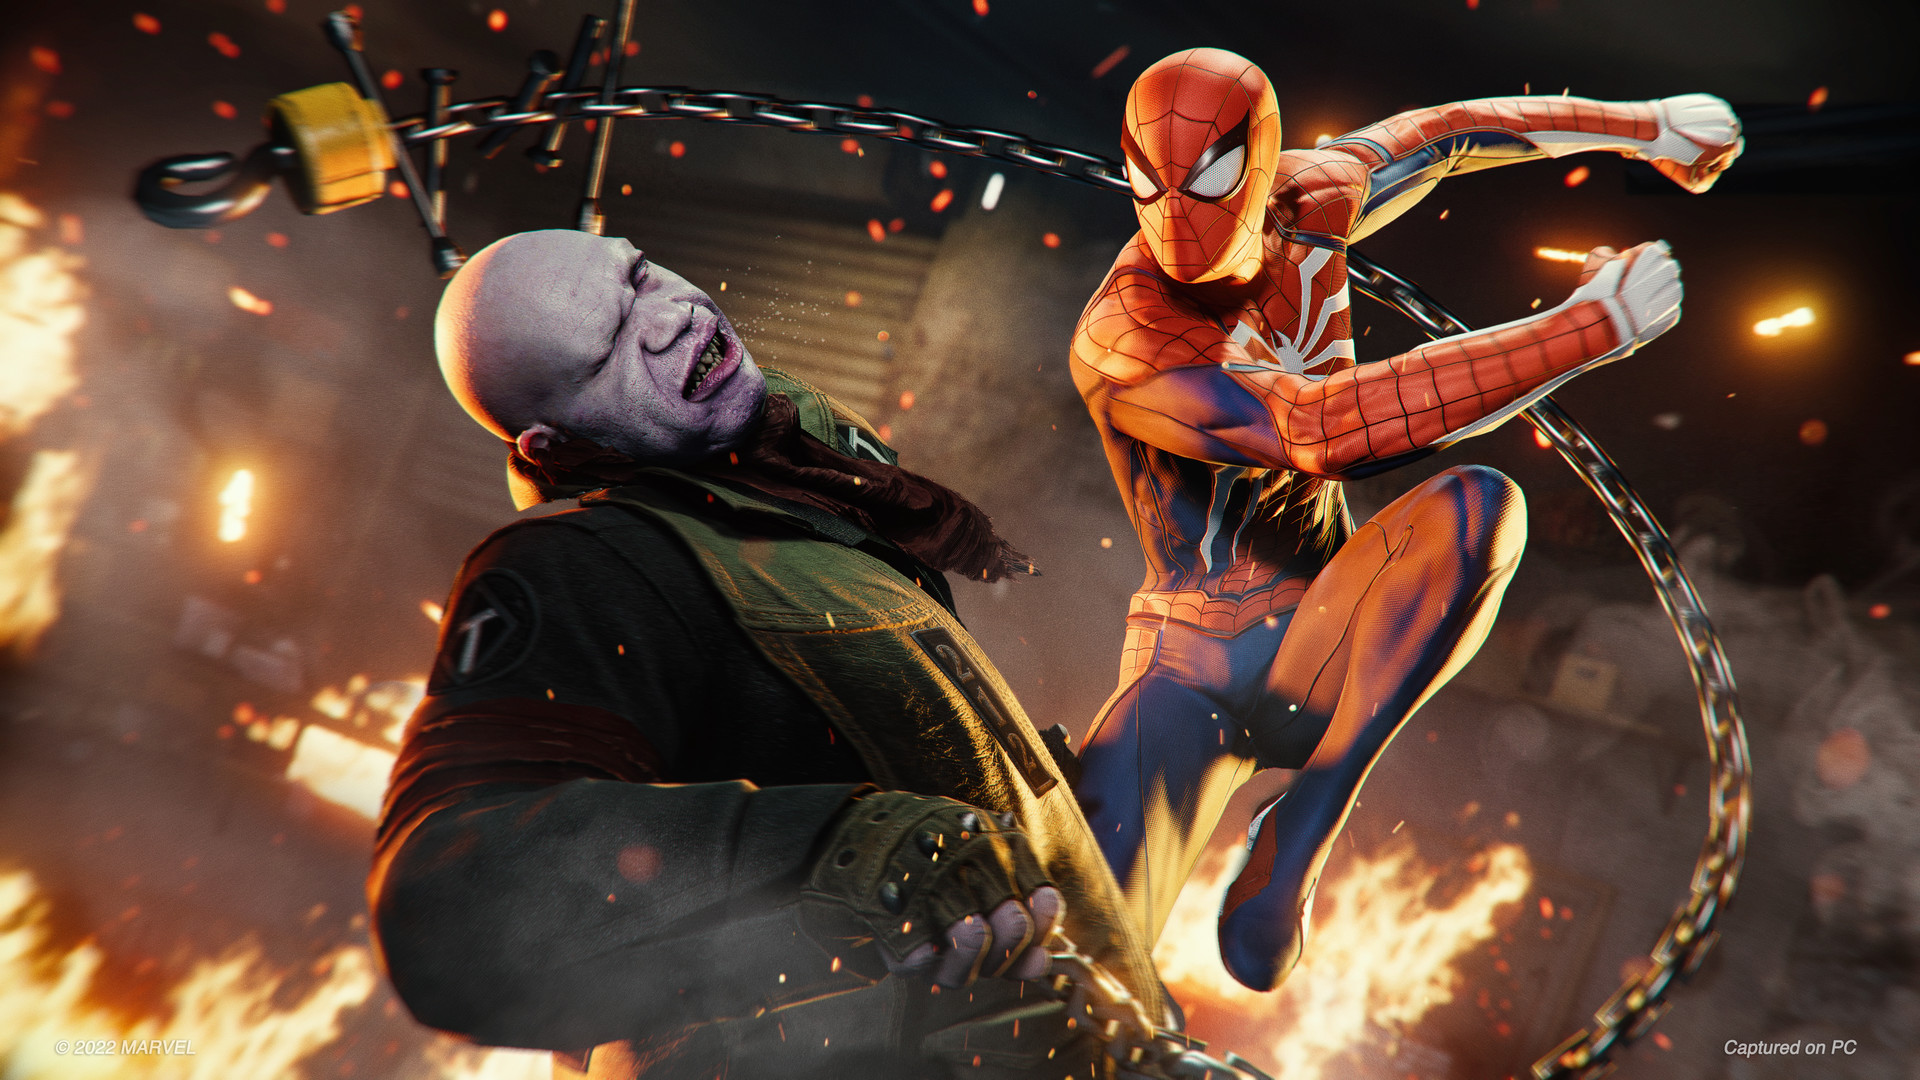 Steam Community :: Marvel's Spider-Man Remastered